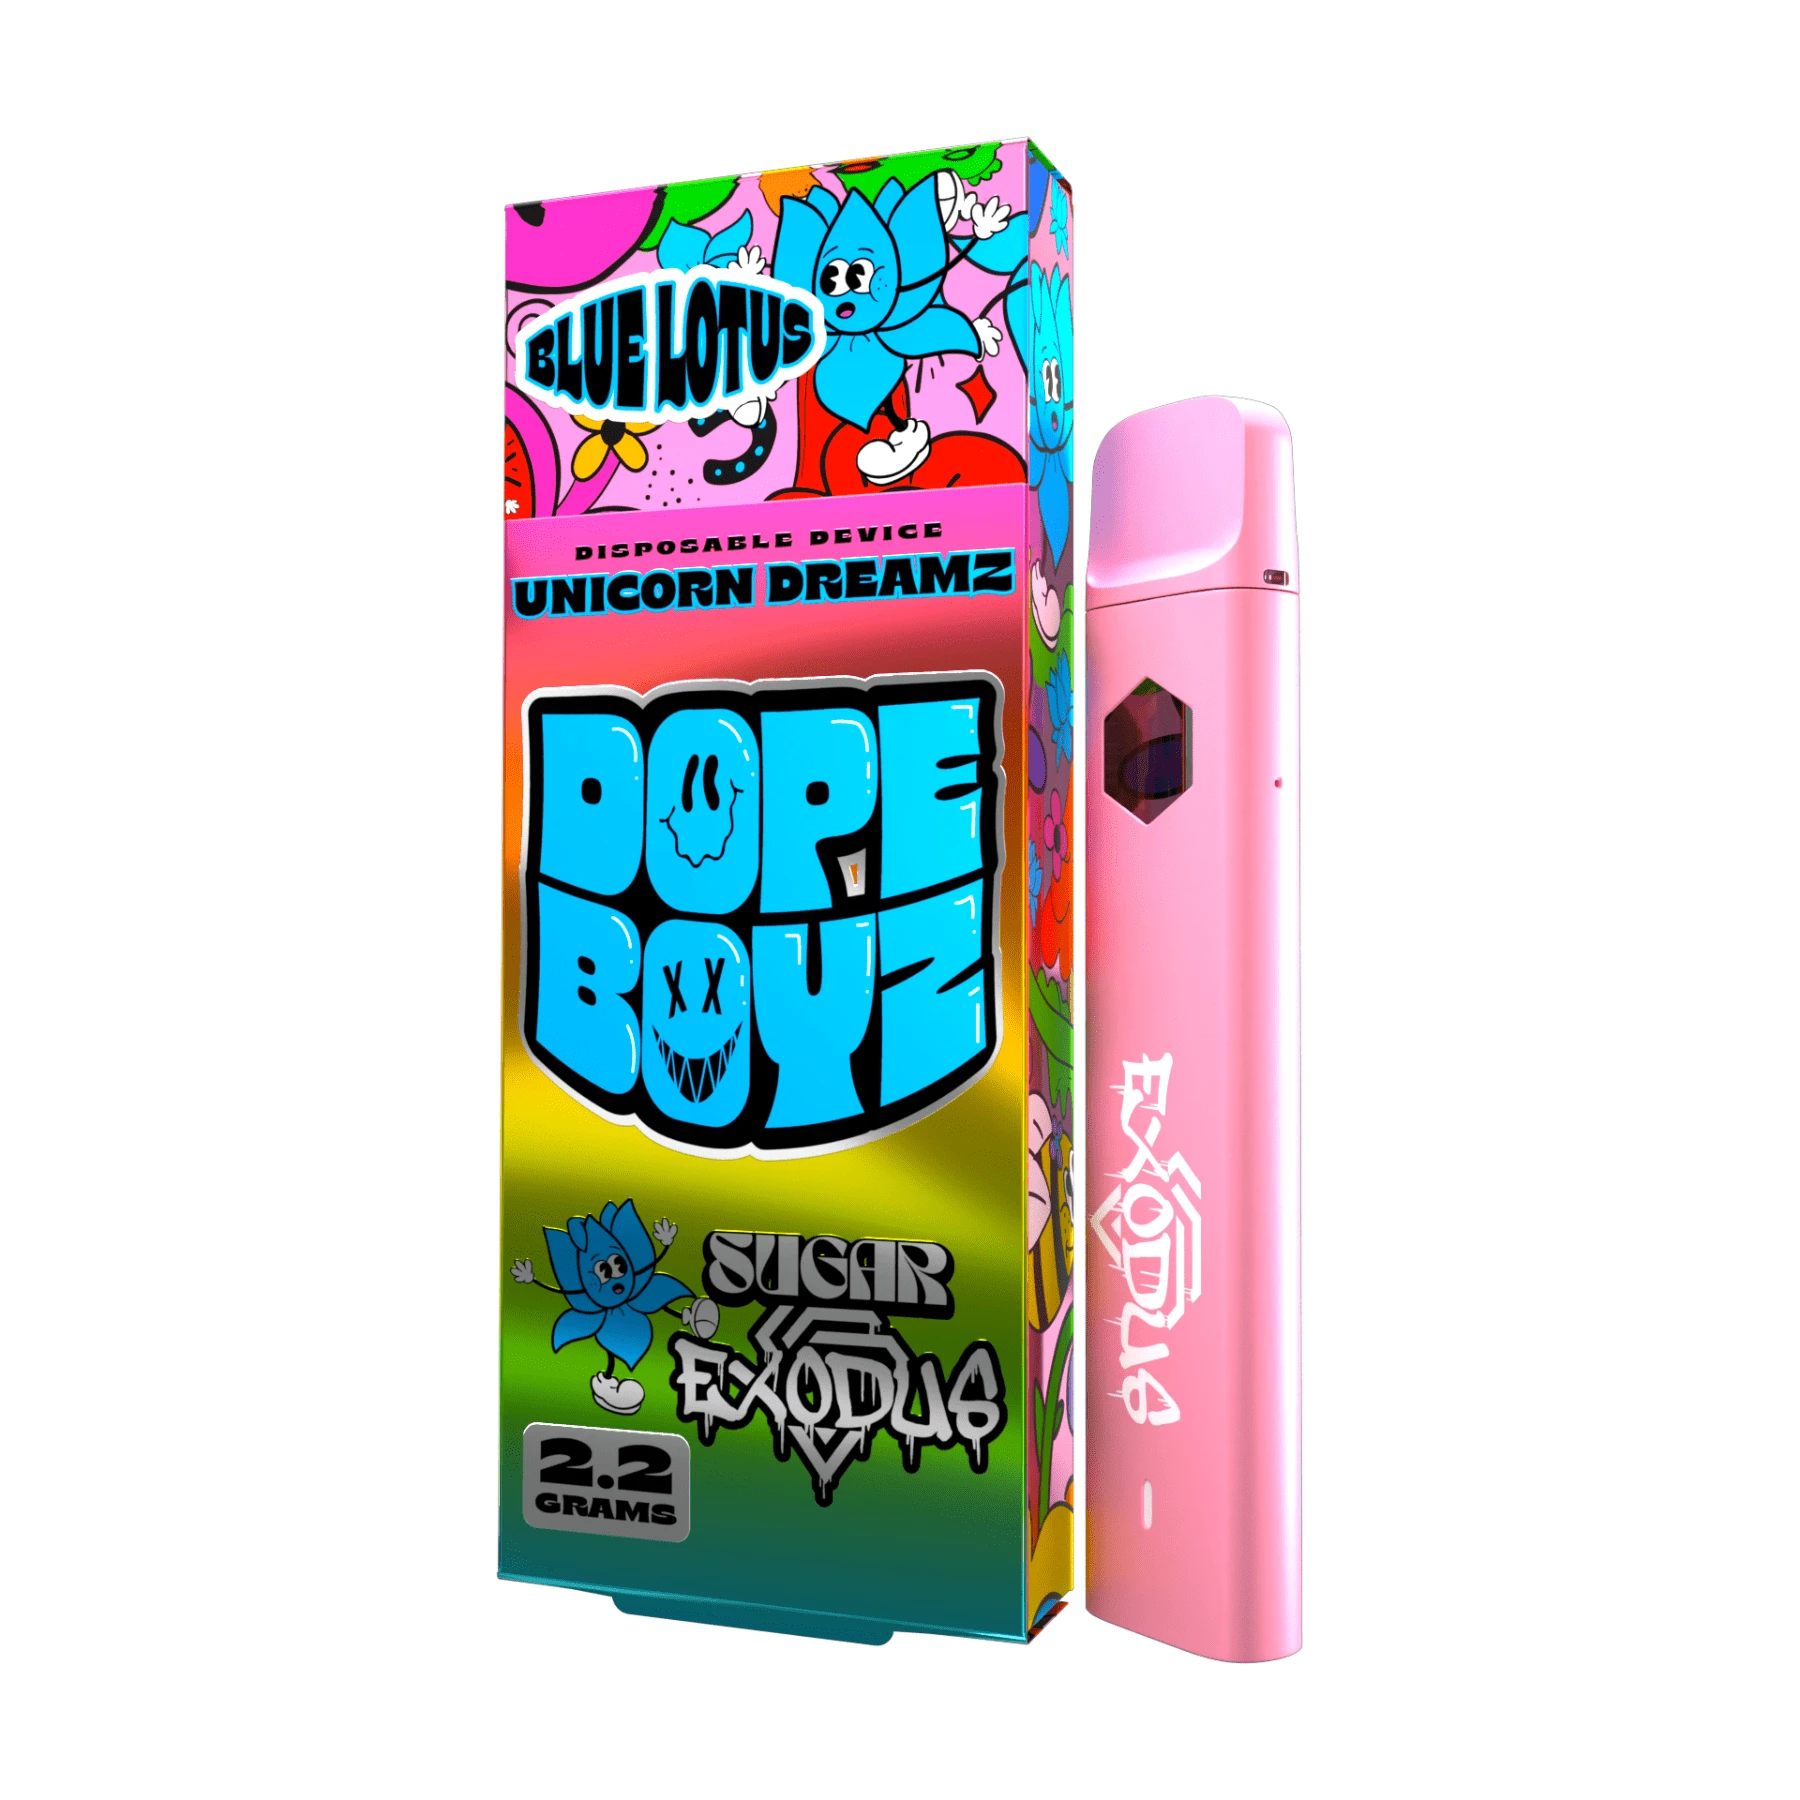 a pink box with a pink Sugar Exodus Dope Boyz Blue Lotus Disposables (2.2g) e - cigarette.